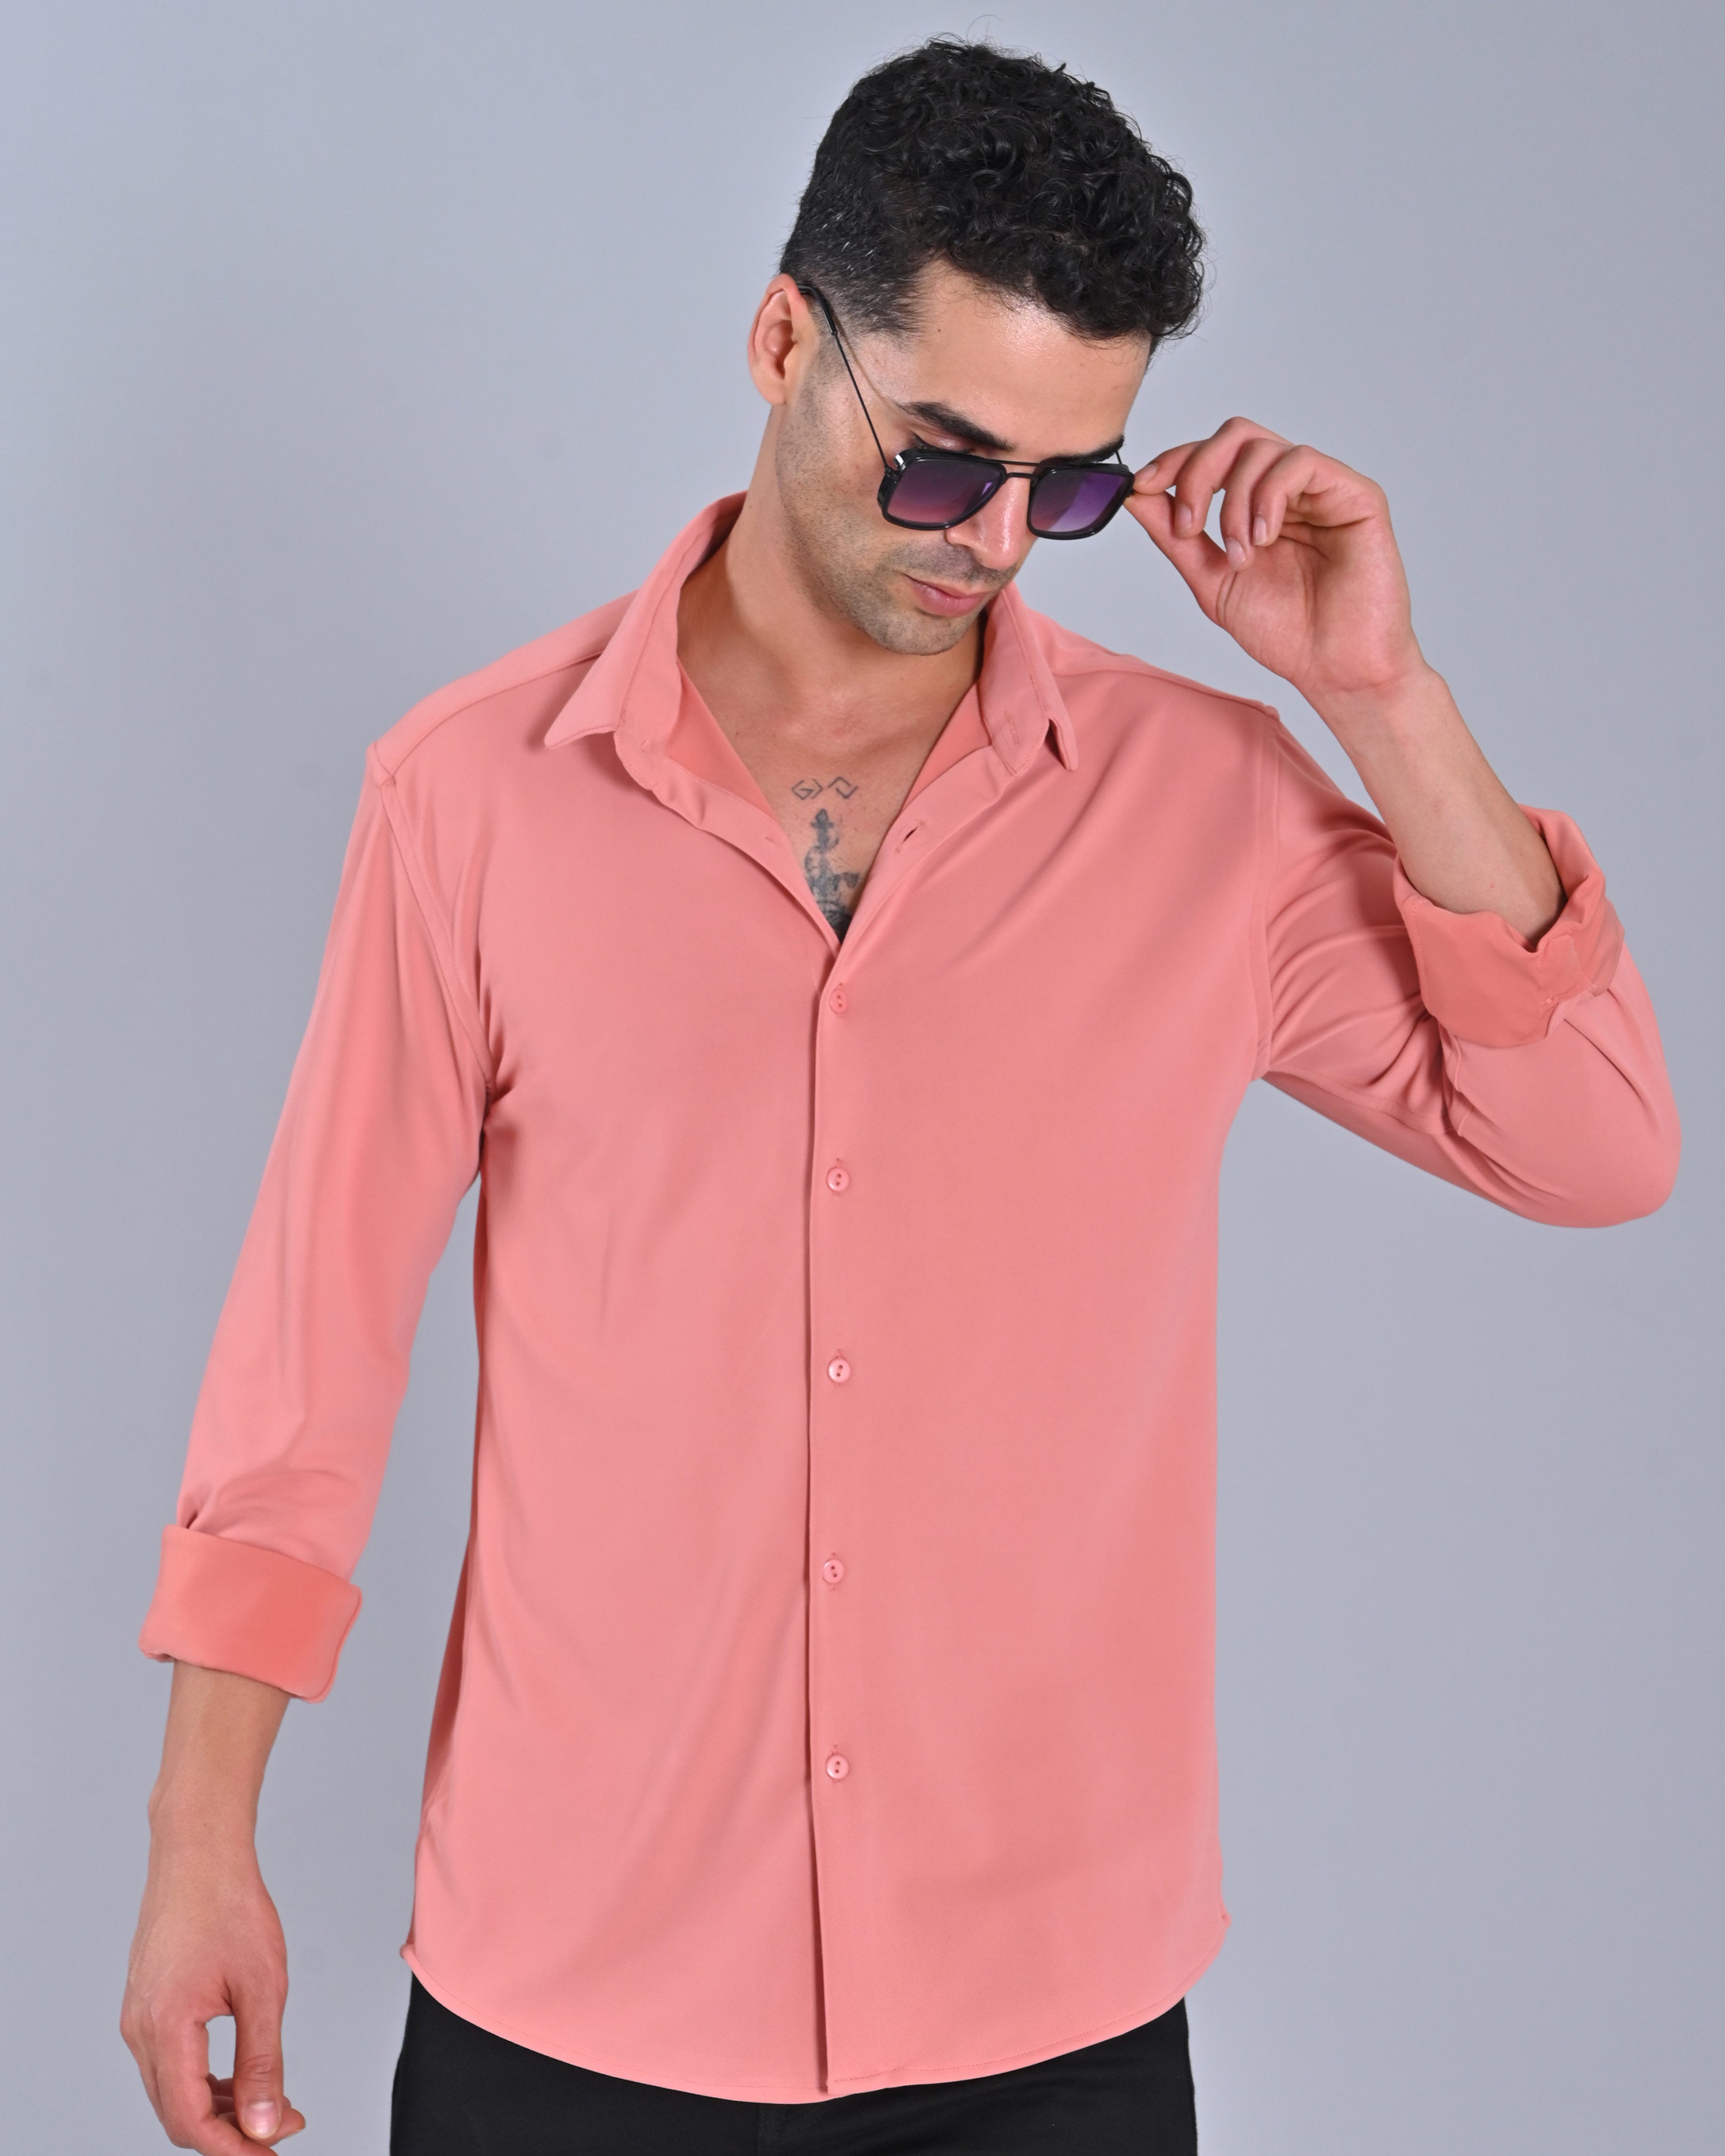 Men's Salmon Pink Cross Knit Shirt Online